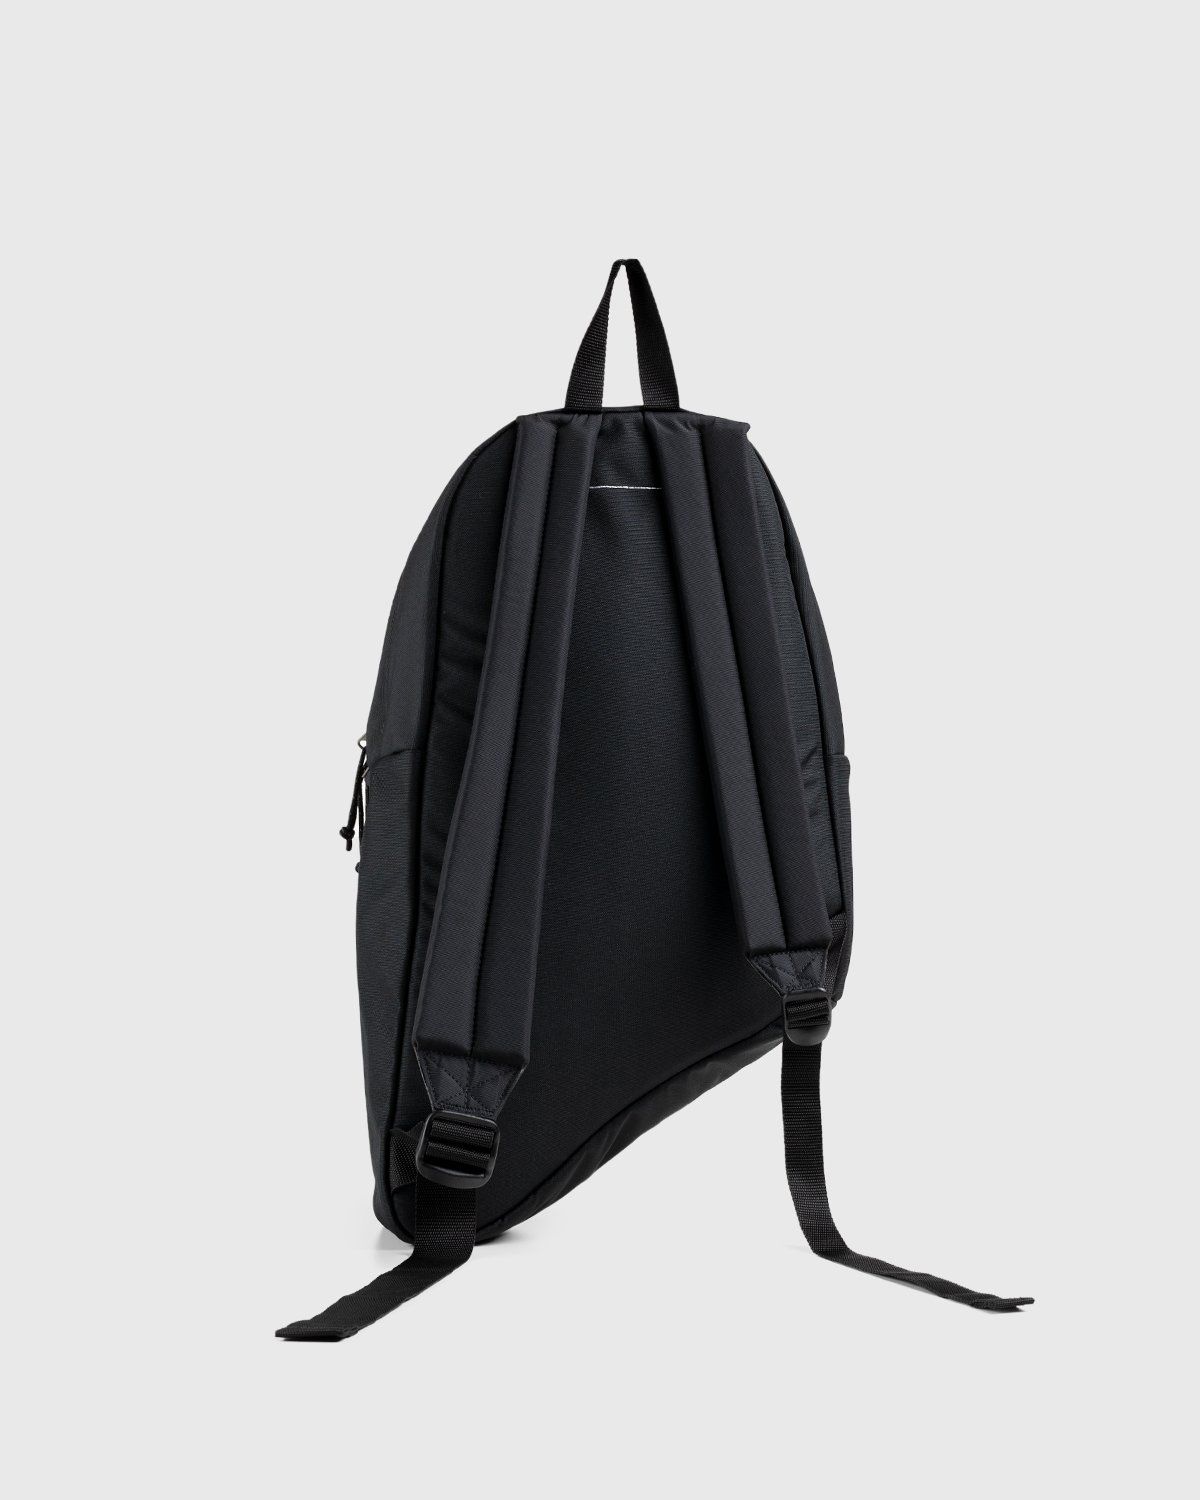 MM6 Maison Margiela x Eastpak – Zaino Backpack Black - Bags - Black - Image 3